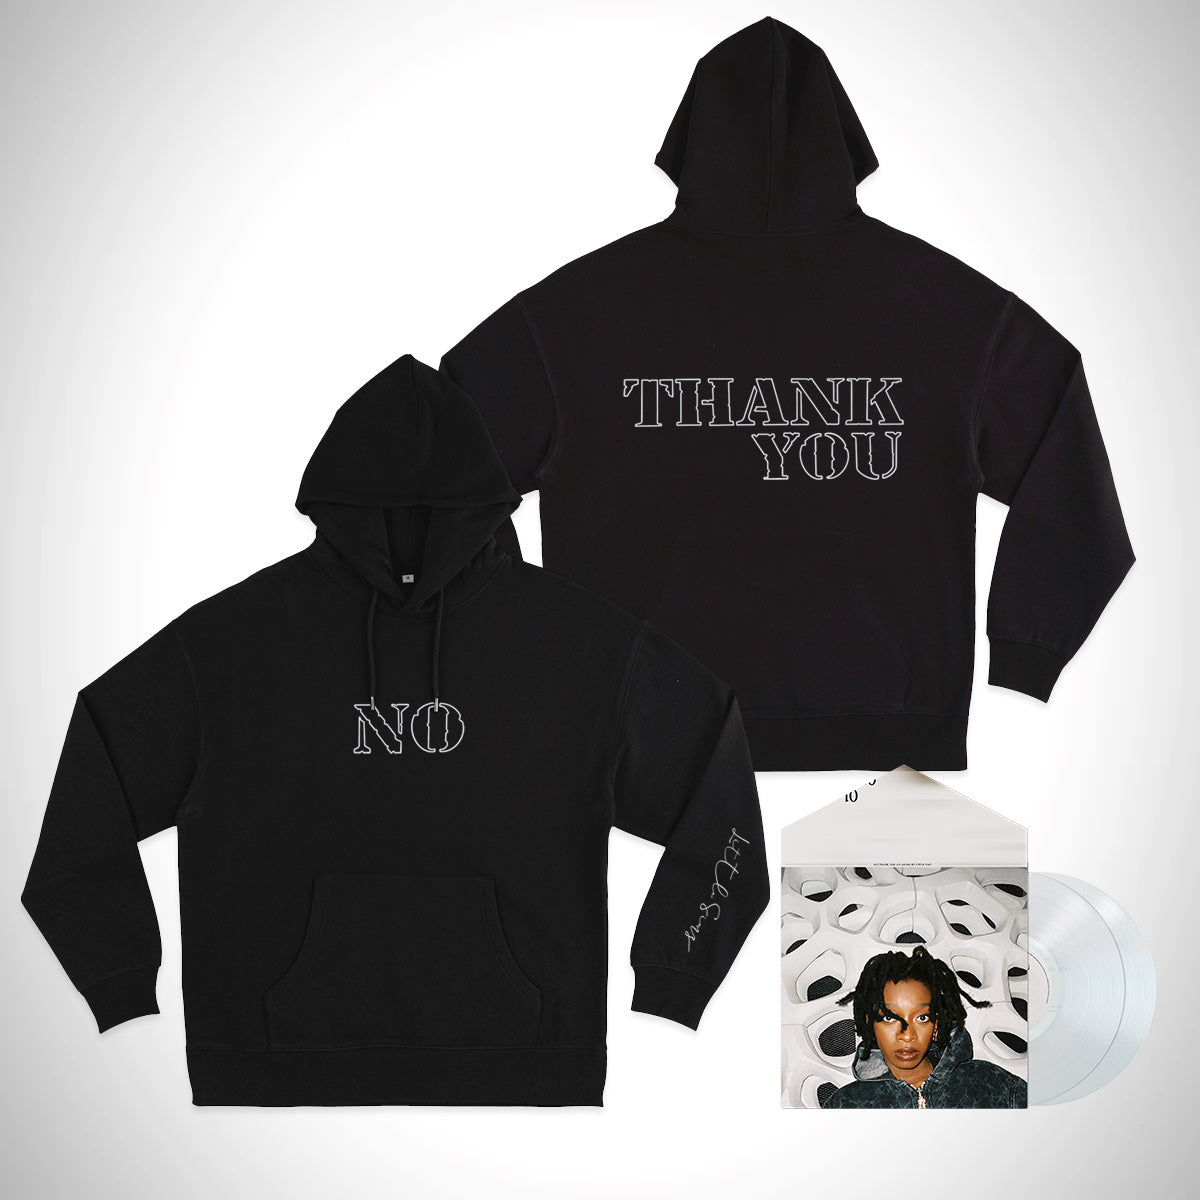 No Thank You Hoodie (Black) + Album (Signed)